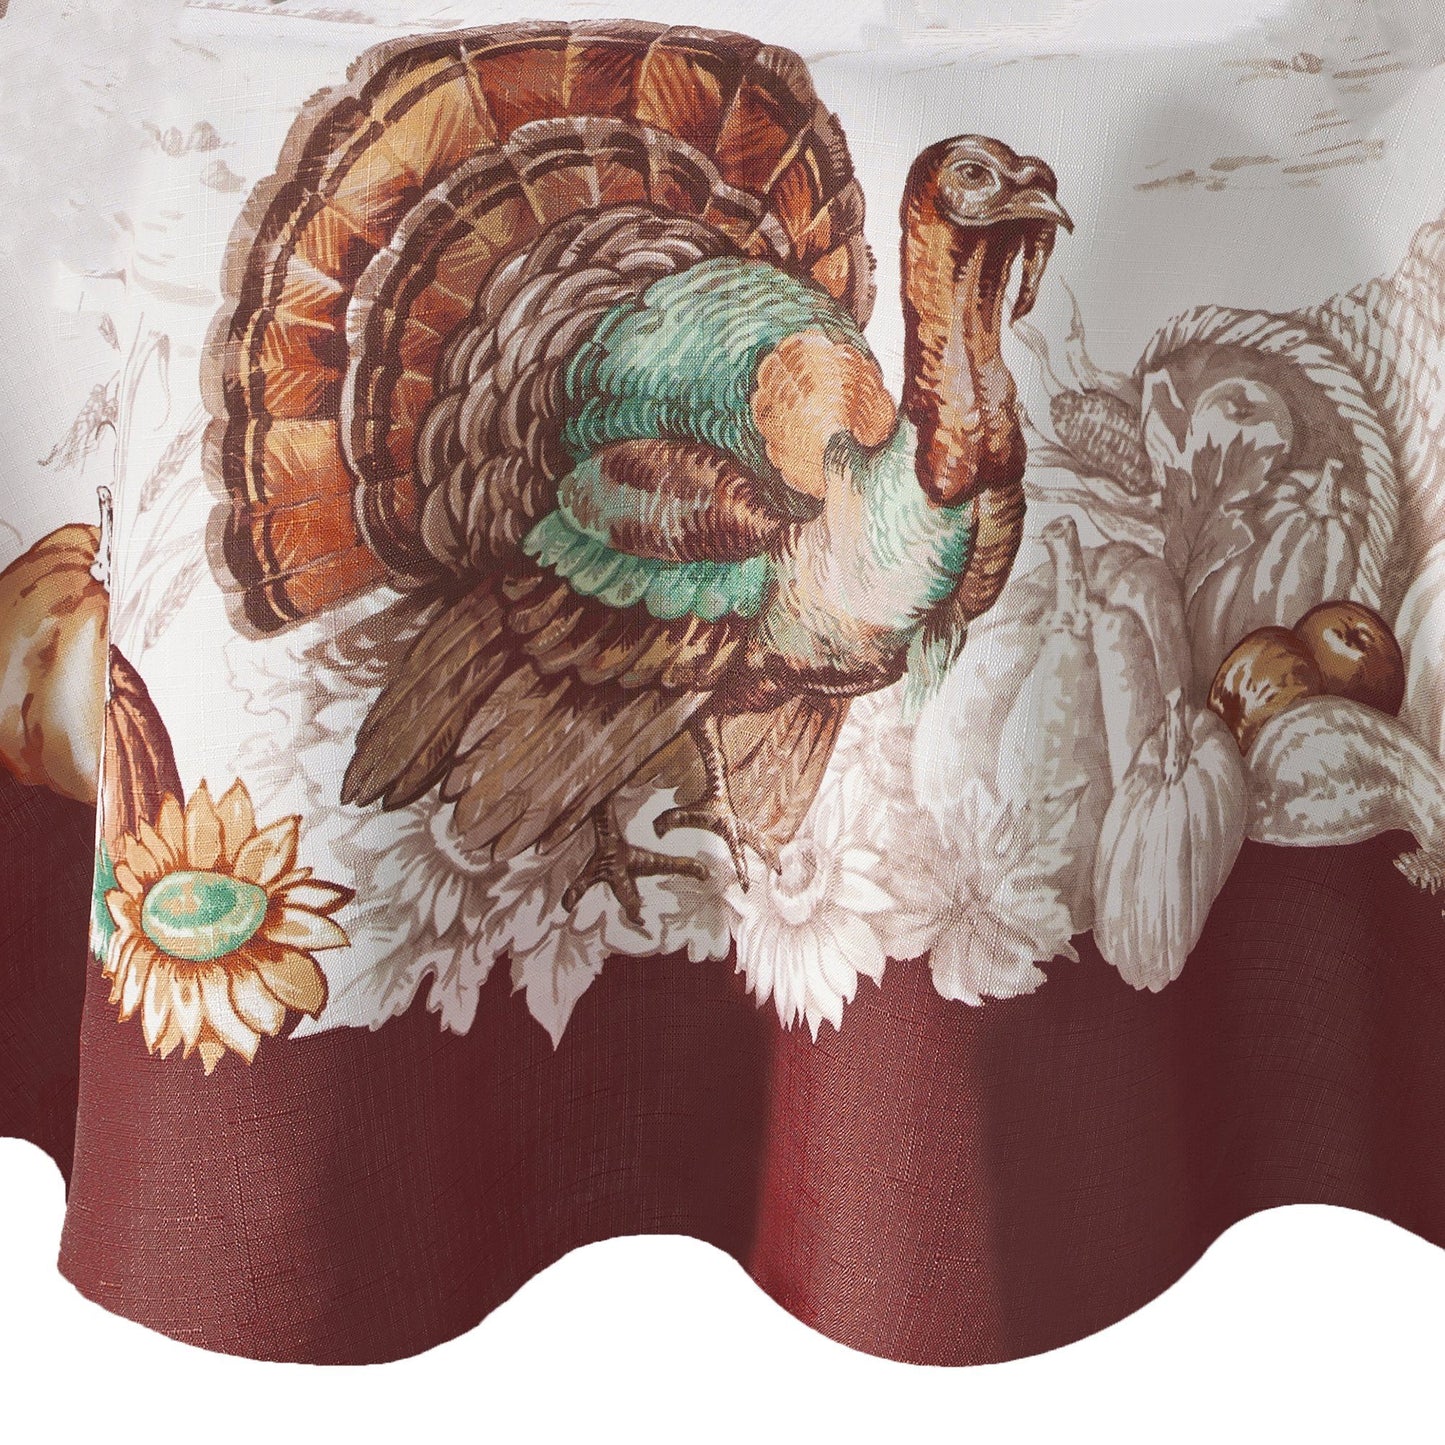 Holiday Turkey Bordered Fall Tablecloth